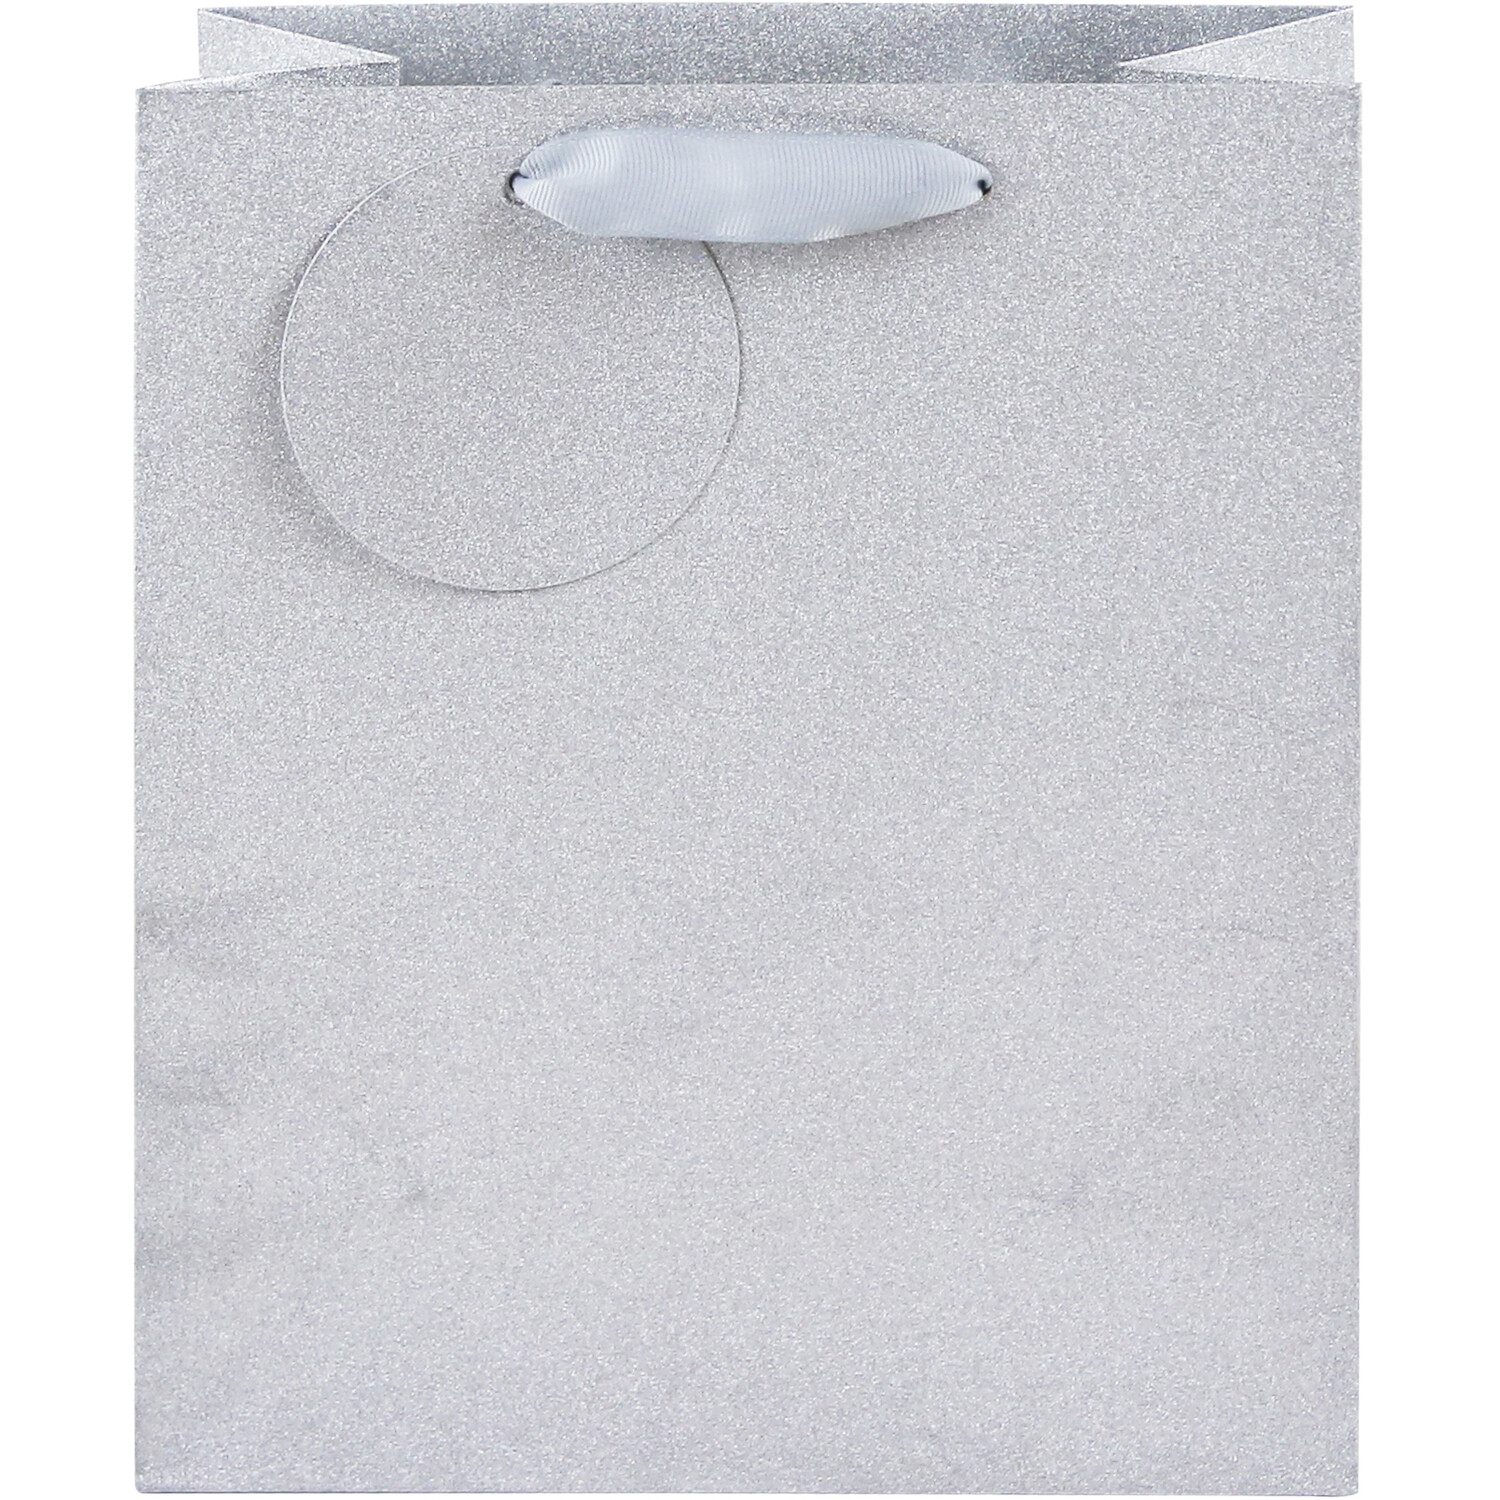 Shimmer Gift Bag - Silver / Medium Image 2